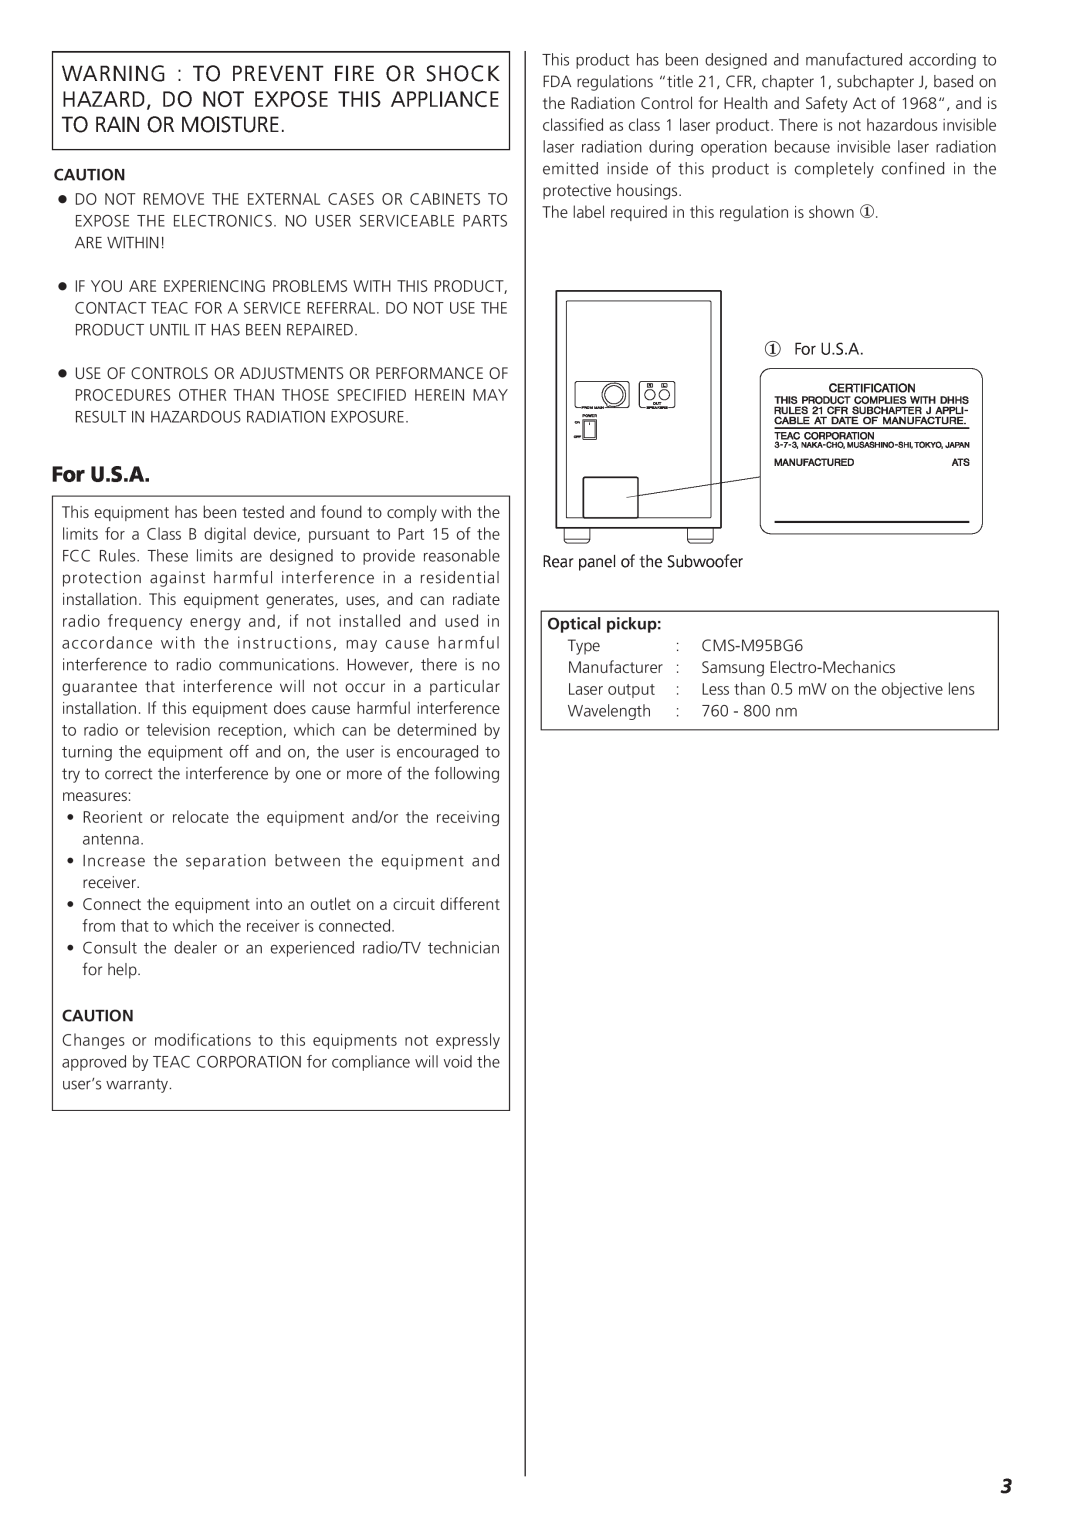 Teac CD-X9 owner manual For U.S.A, Optical pickup 